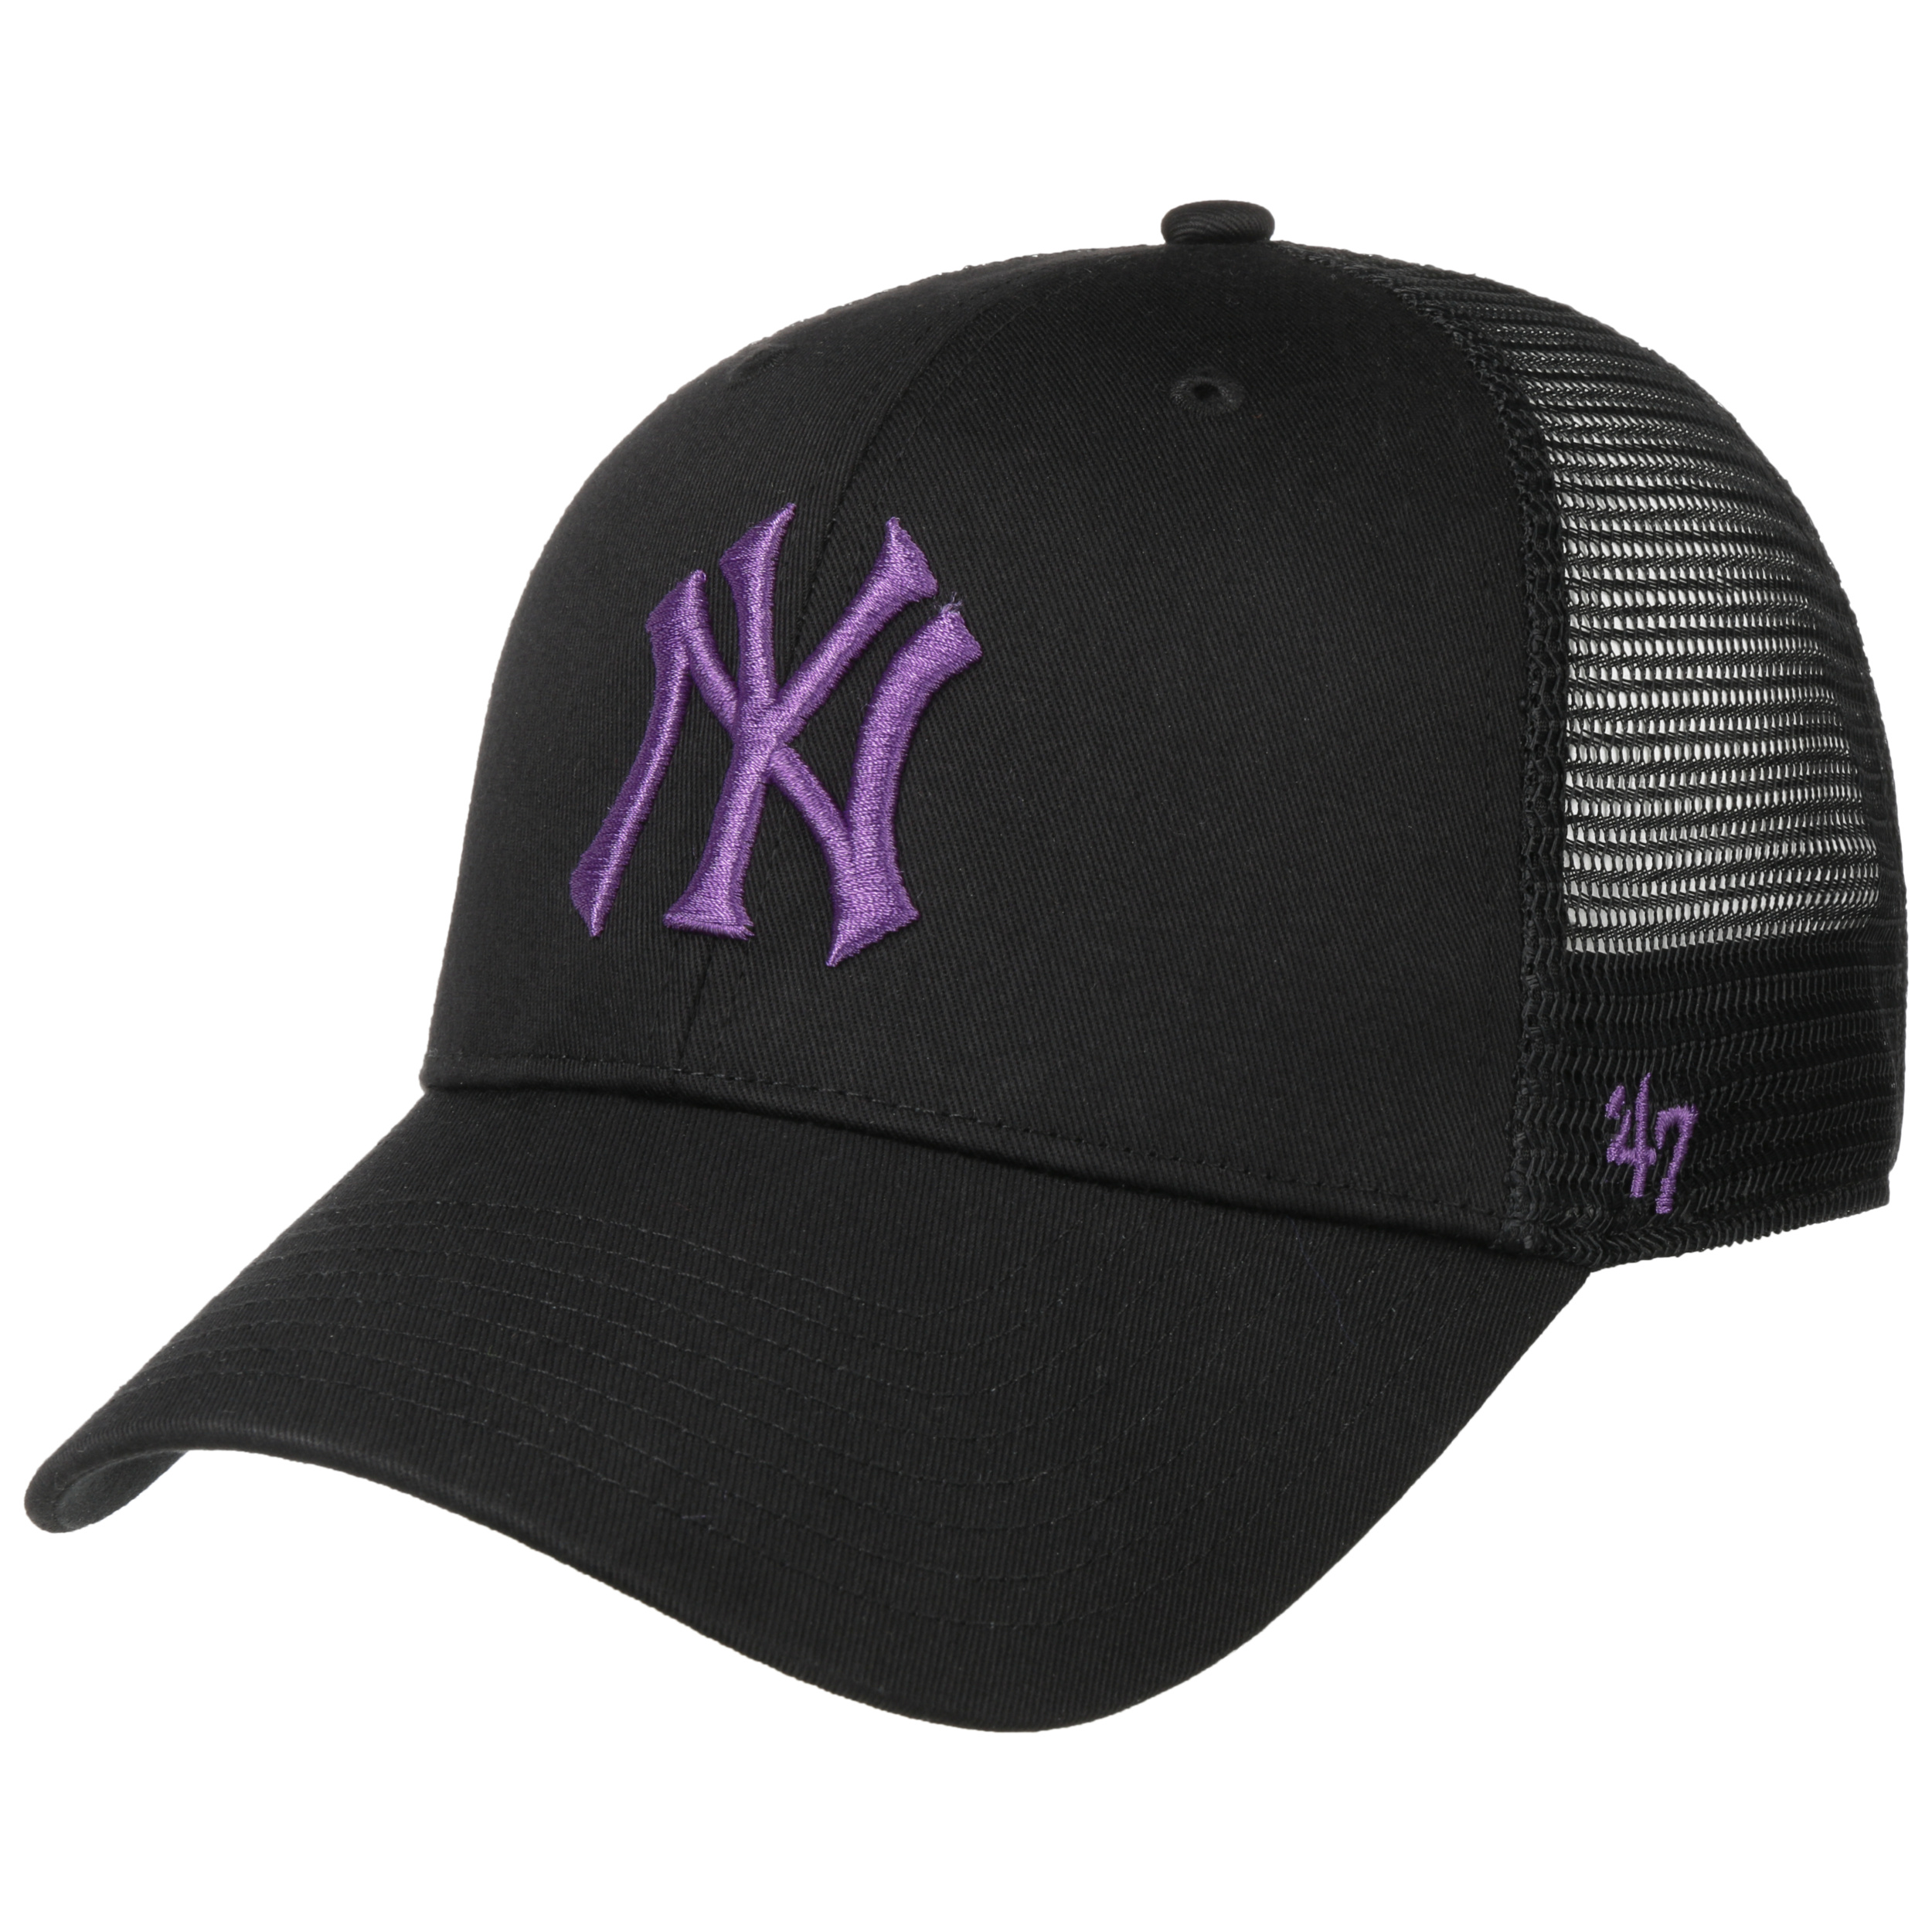 MLB Yankees Branson Trucker Cap by 47 Brand 